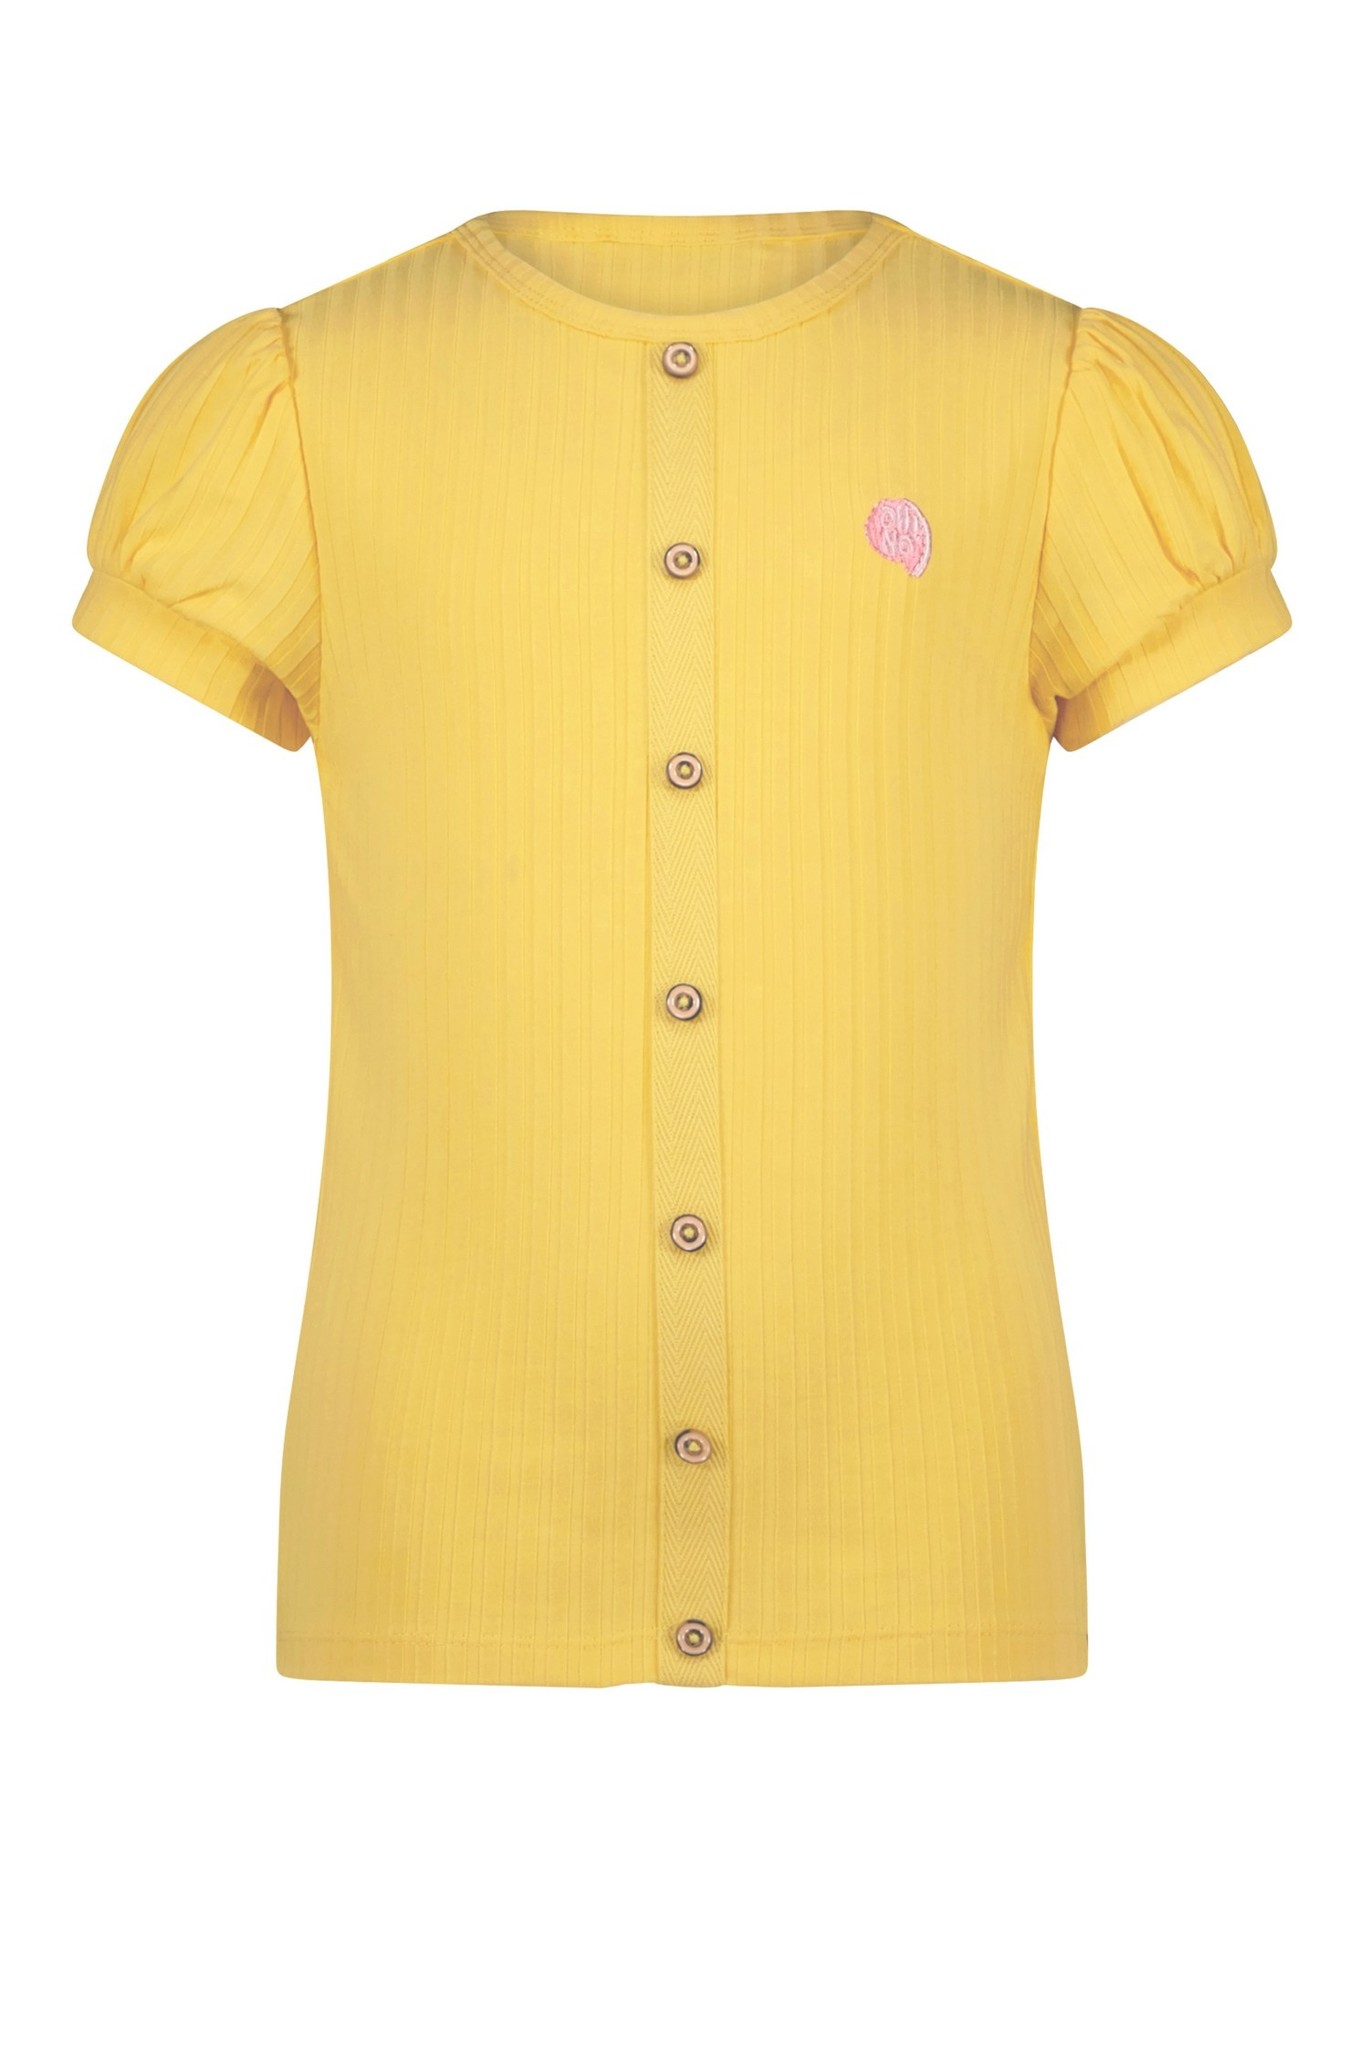 NONO - T-Shirt - Lemon Drop - Maat 116